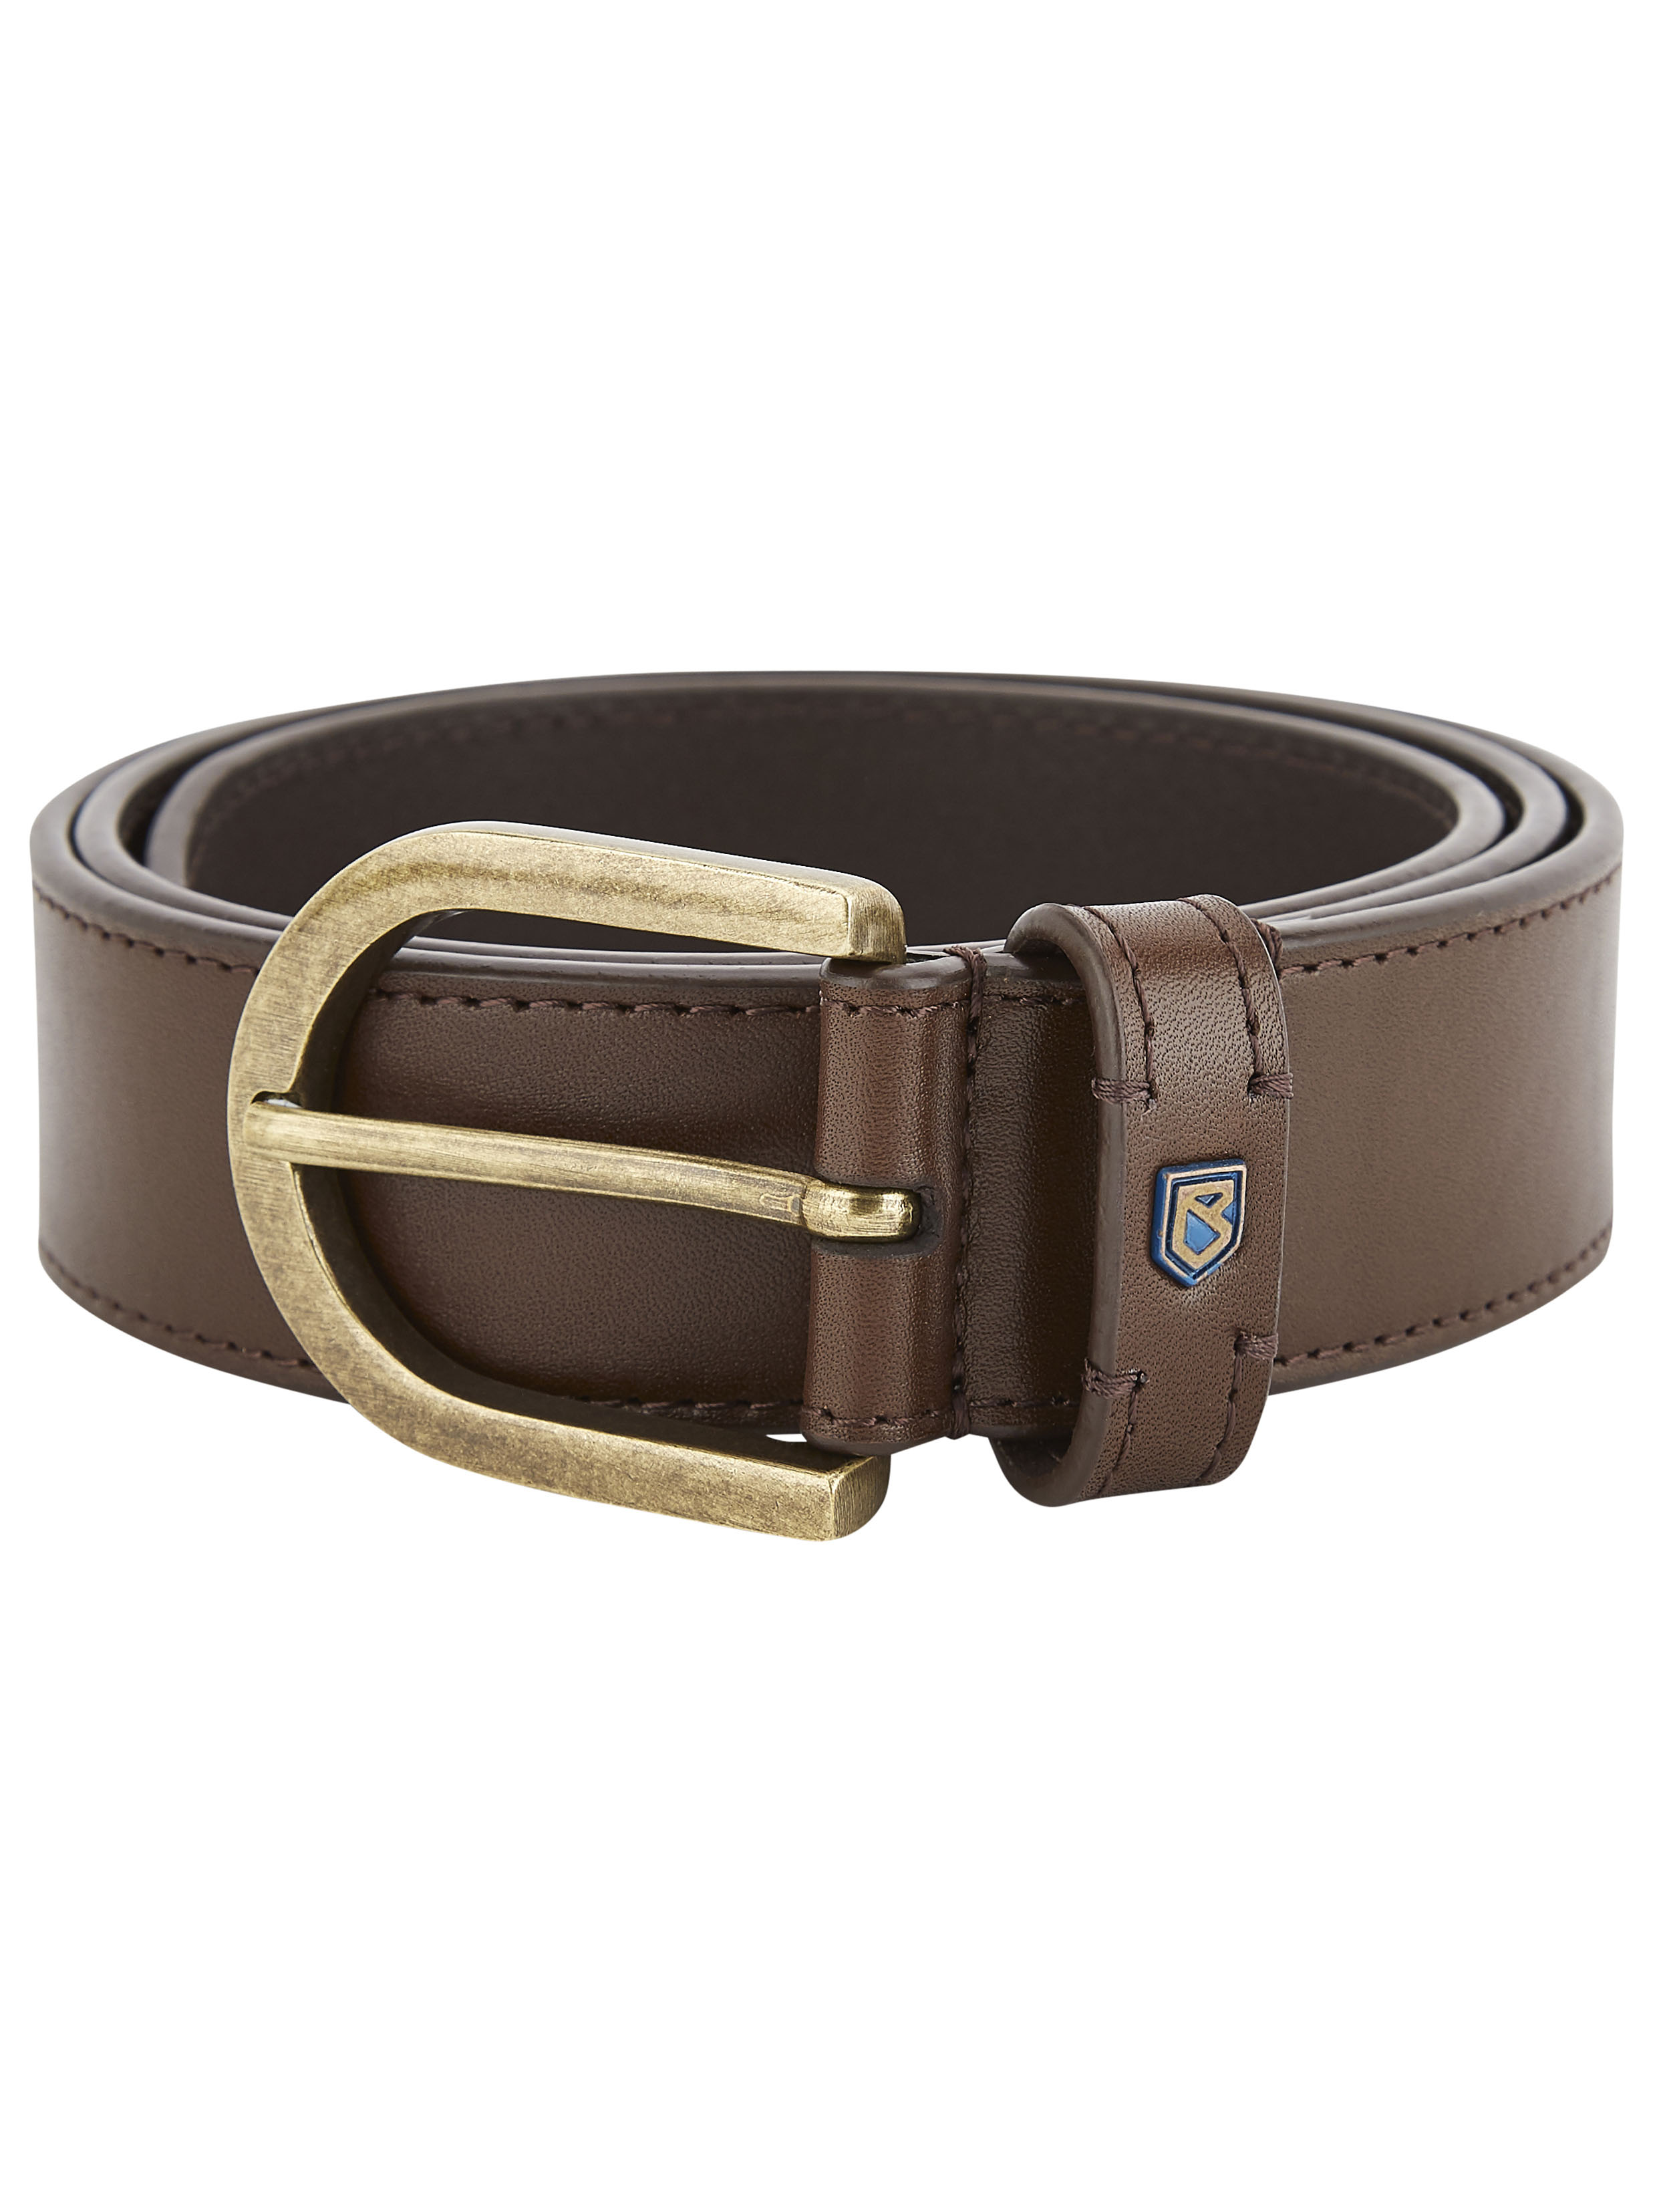 Porthall Leather Belt - Brown